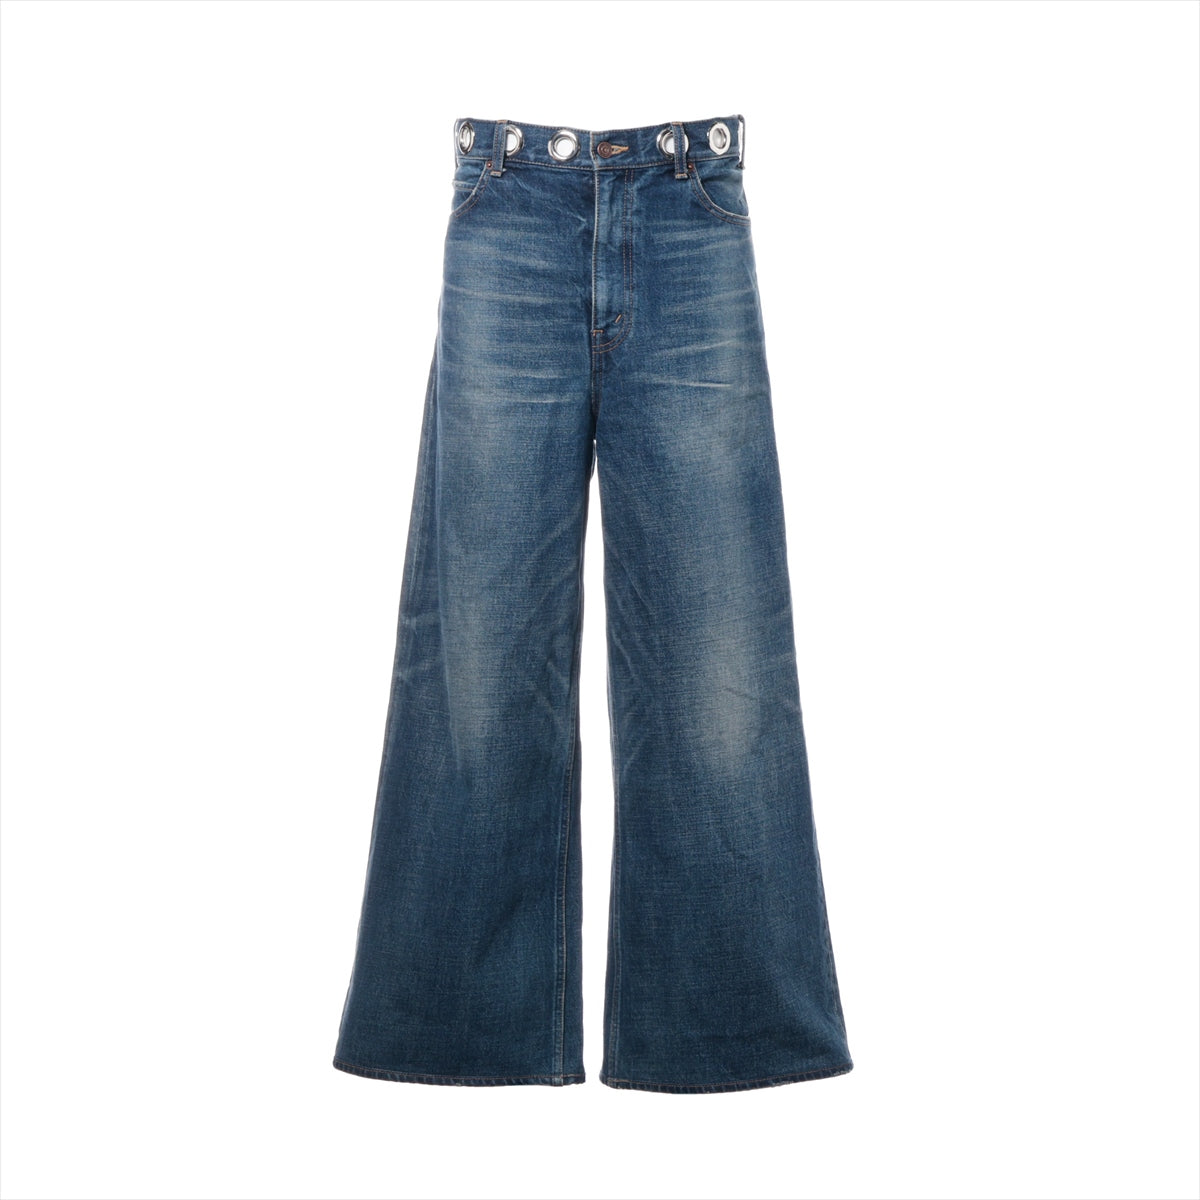 Celine 22 SS Cotton Denim Pants 32  Blue Eddy Age Ilet Freeroll Jeans